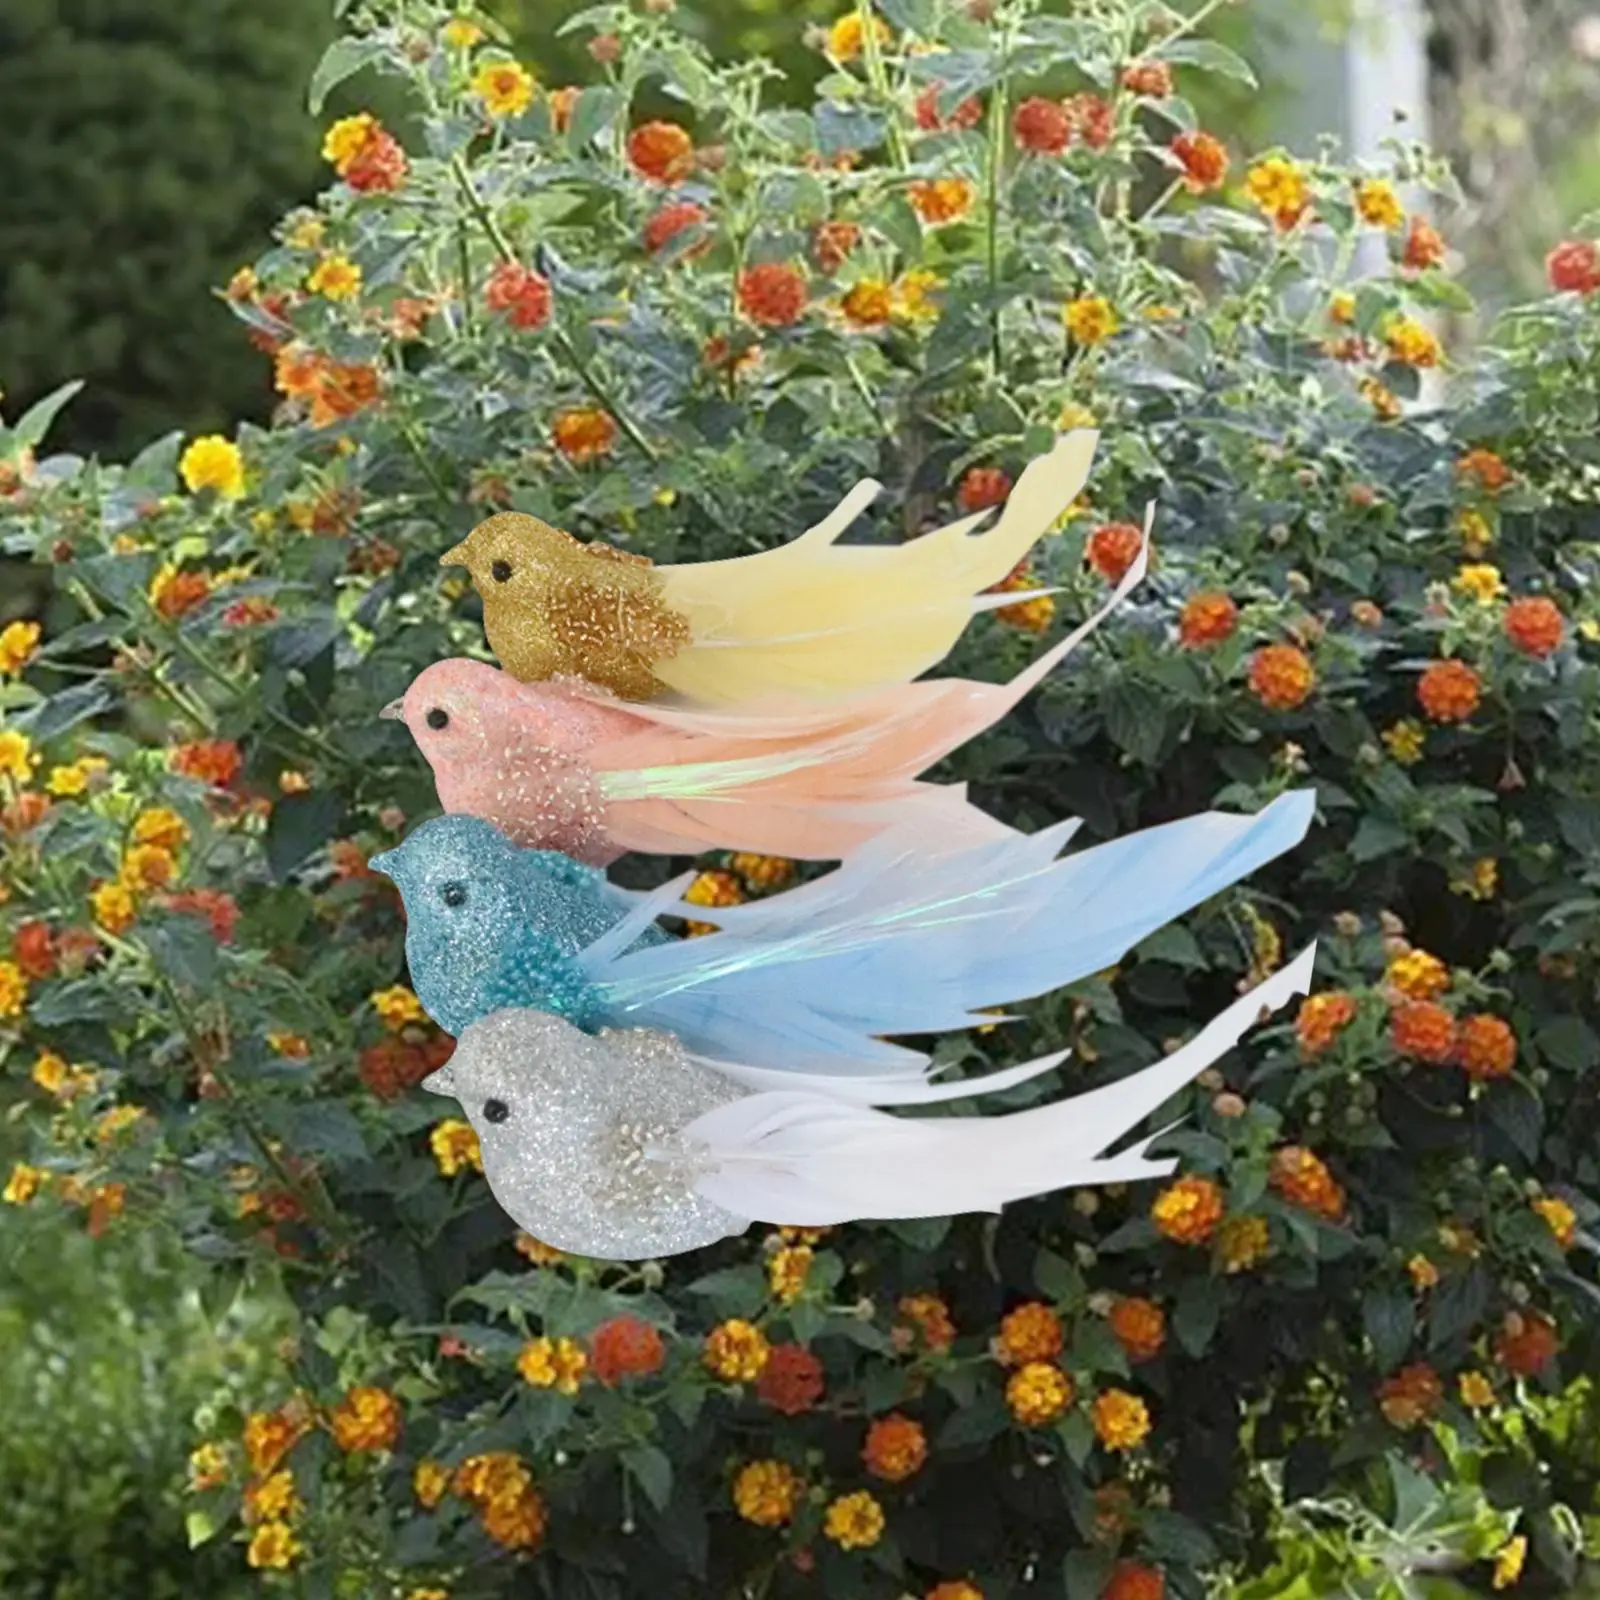 4 Pieces Simulation Foam Birds Fake Parrot Parrot Figure Artificial Birds for Garden Window Floral Arrangement DIY Crafts Home